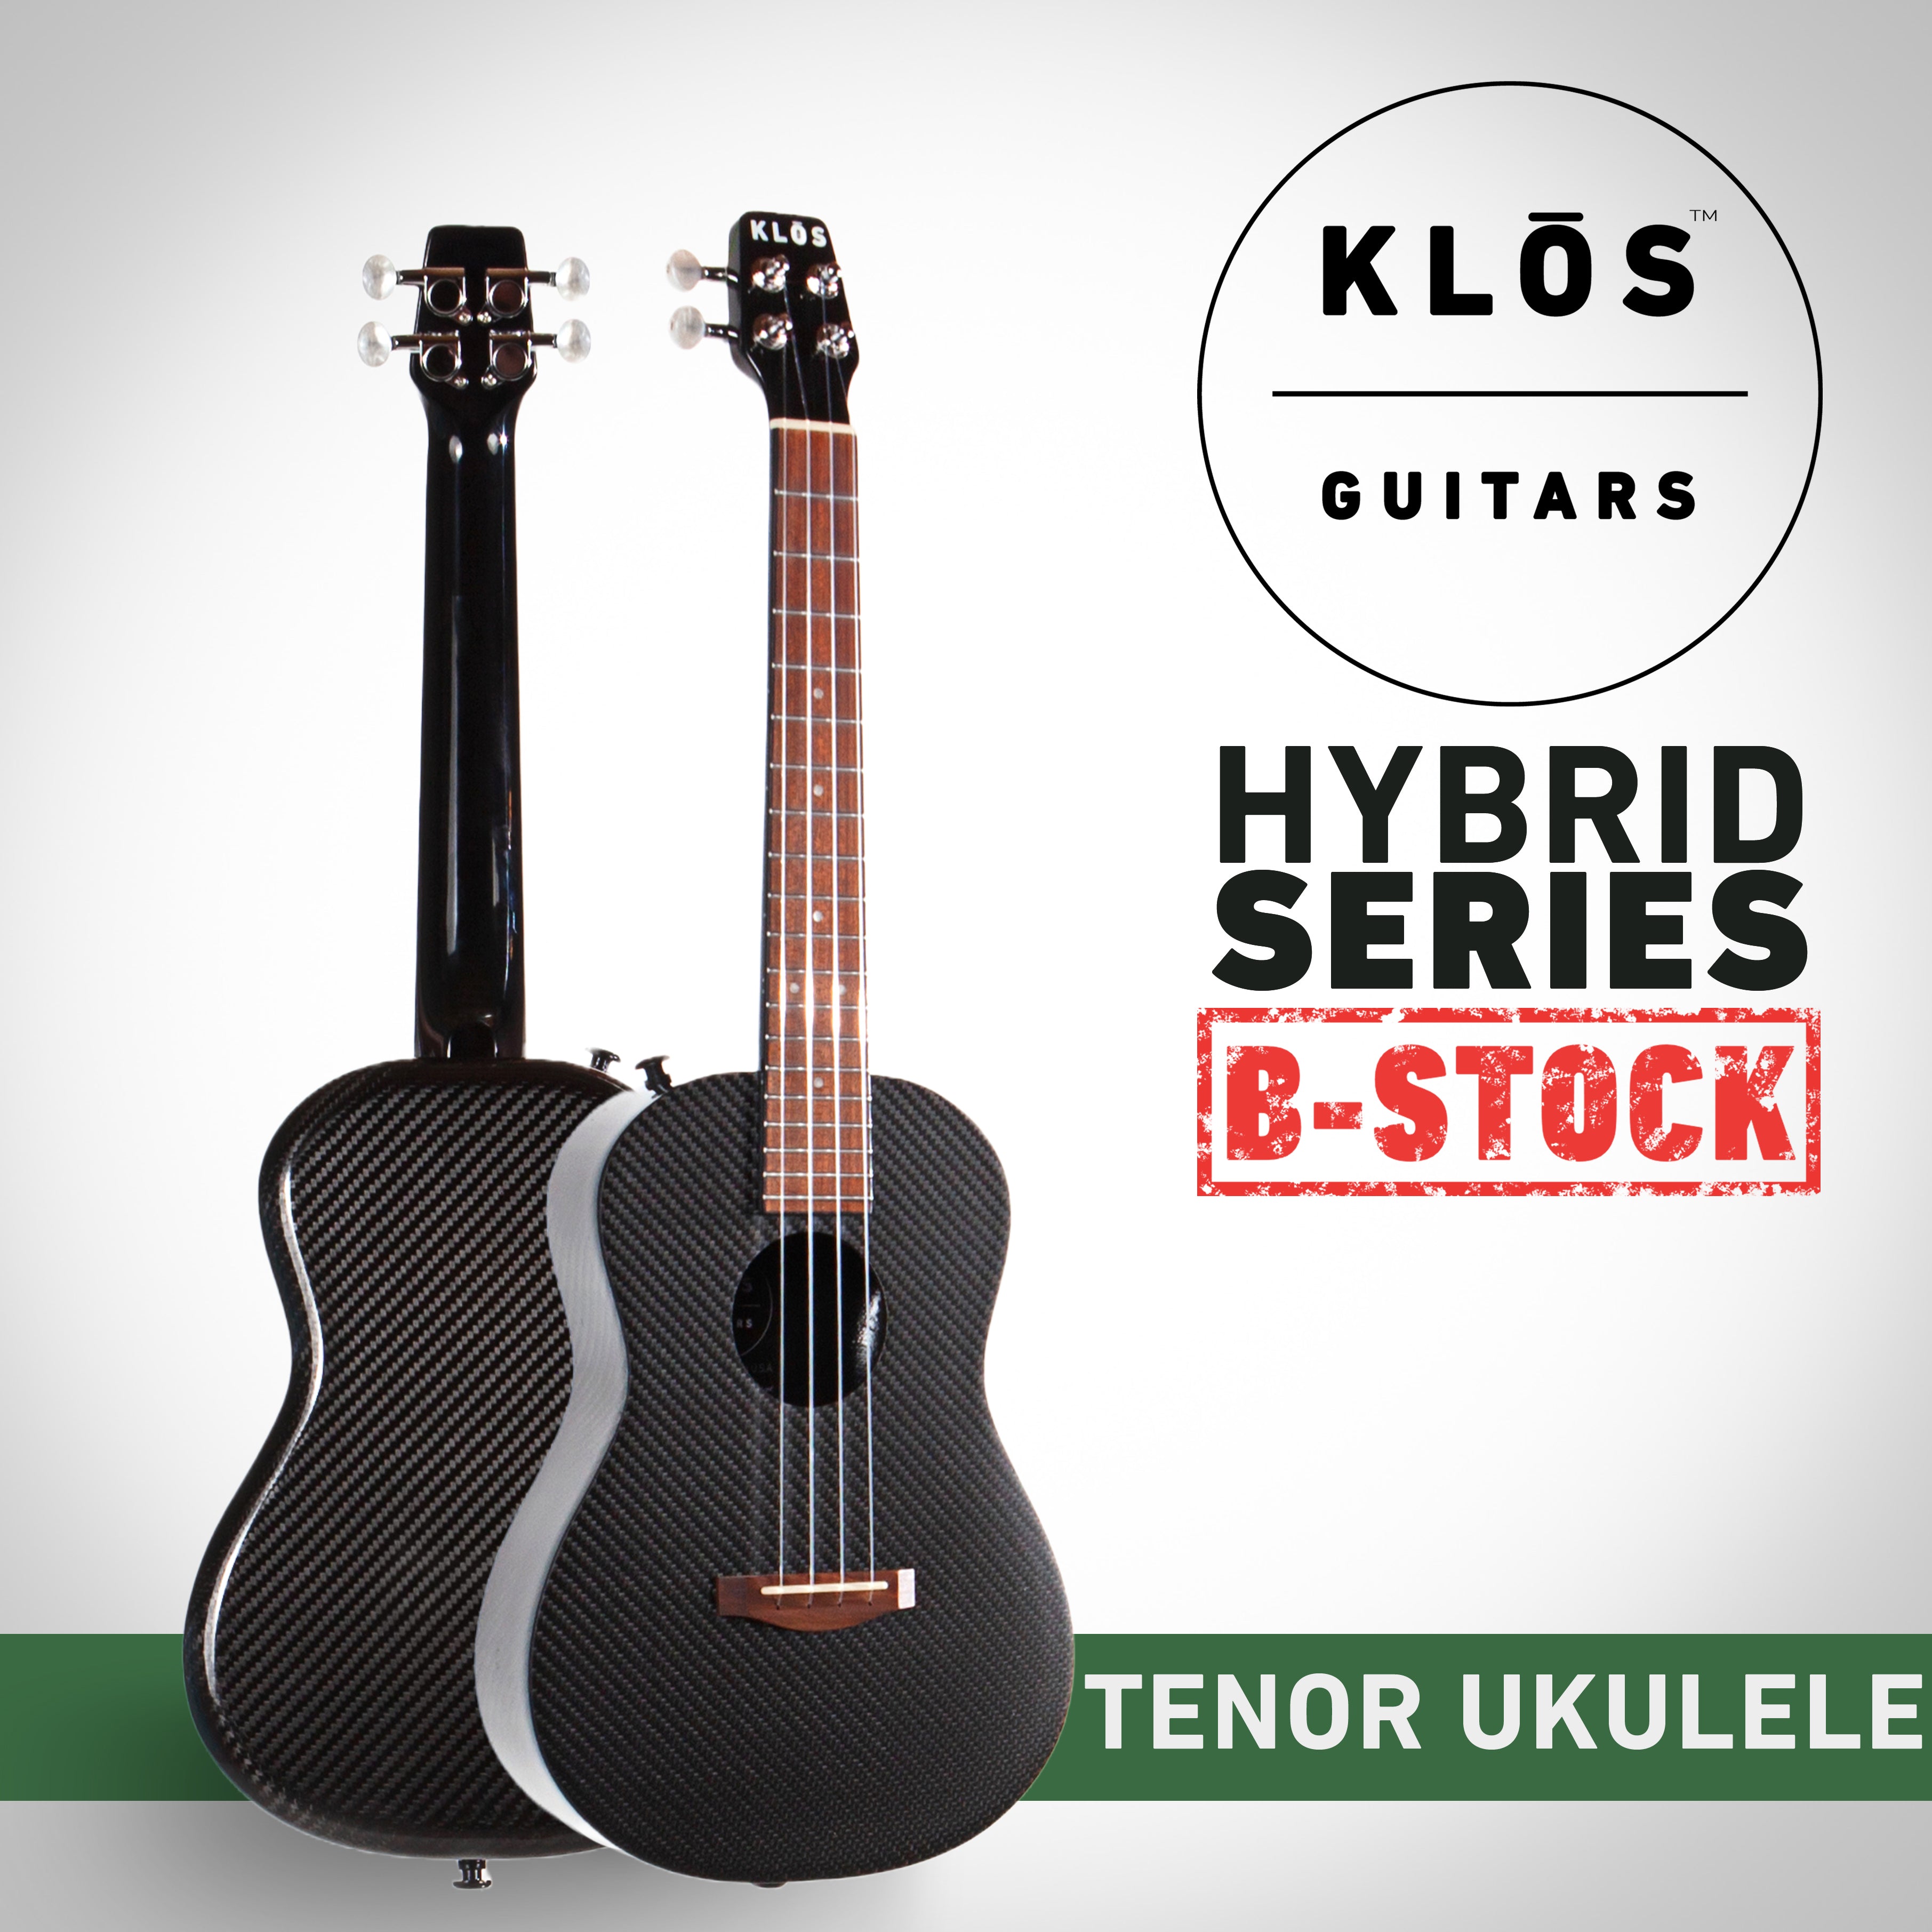 B-stock tenor ukulele